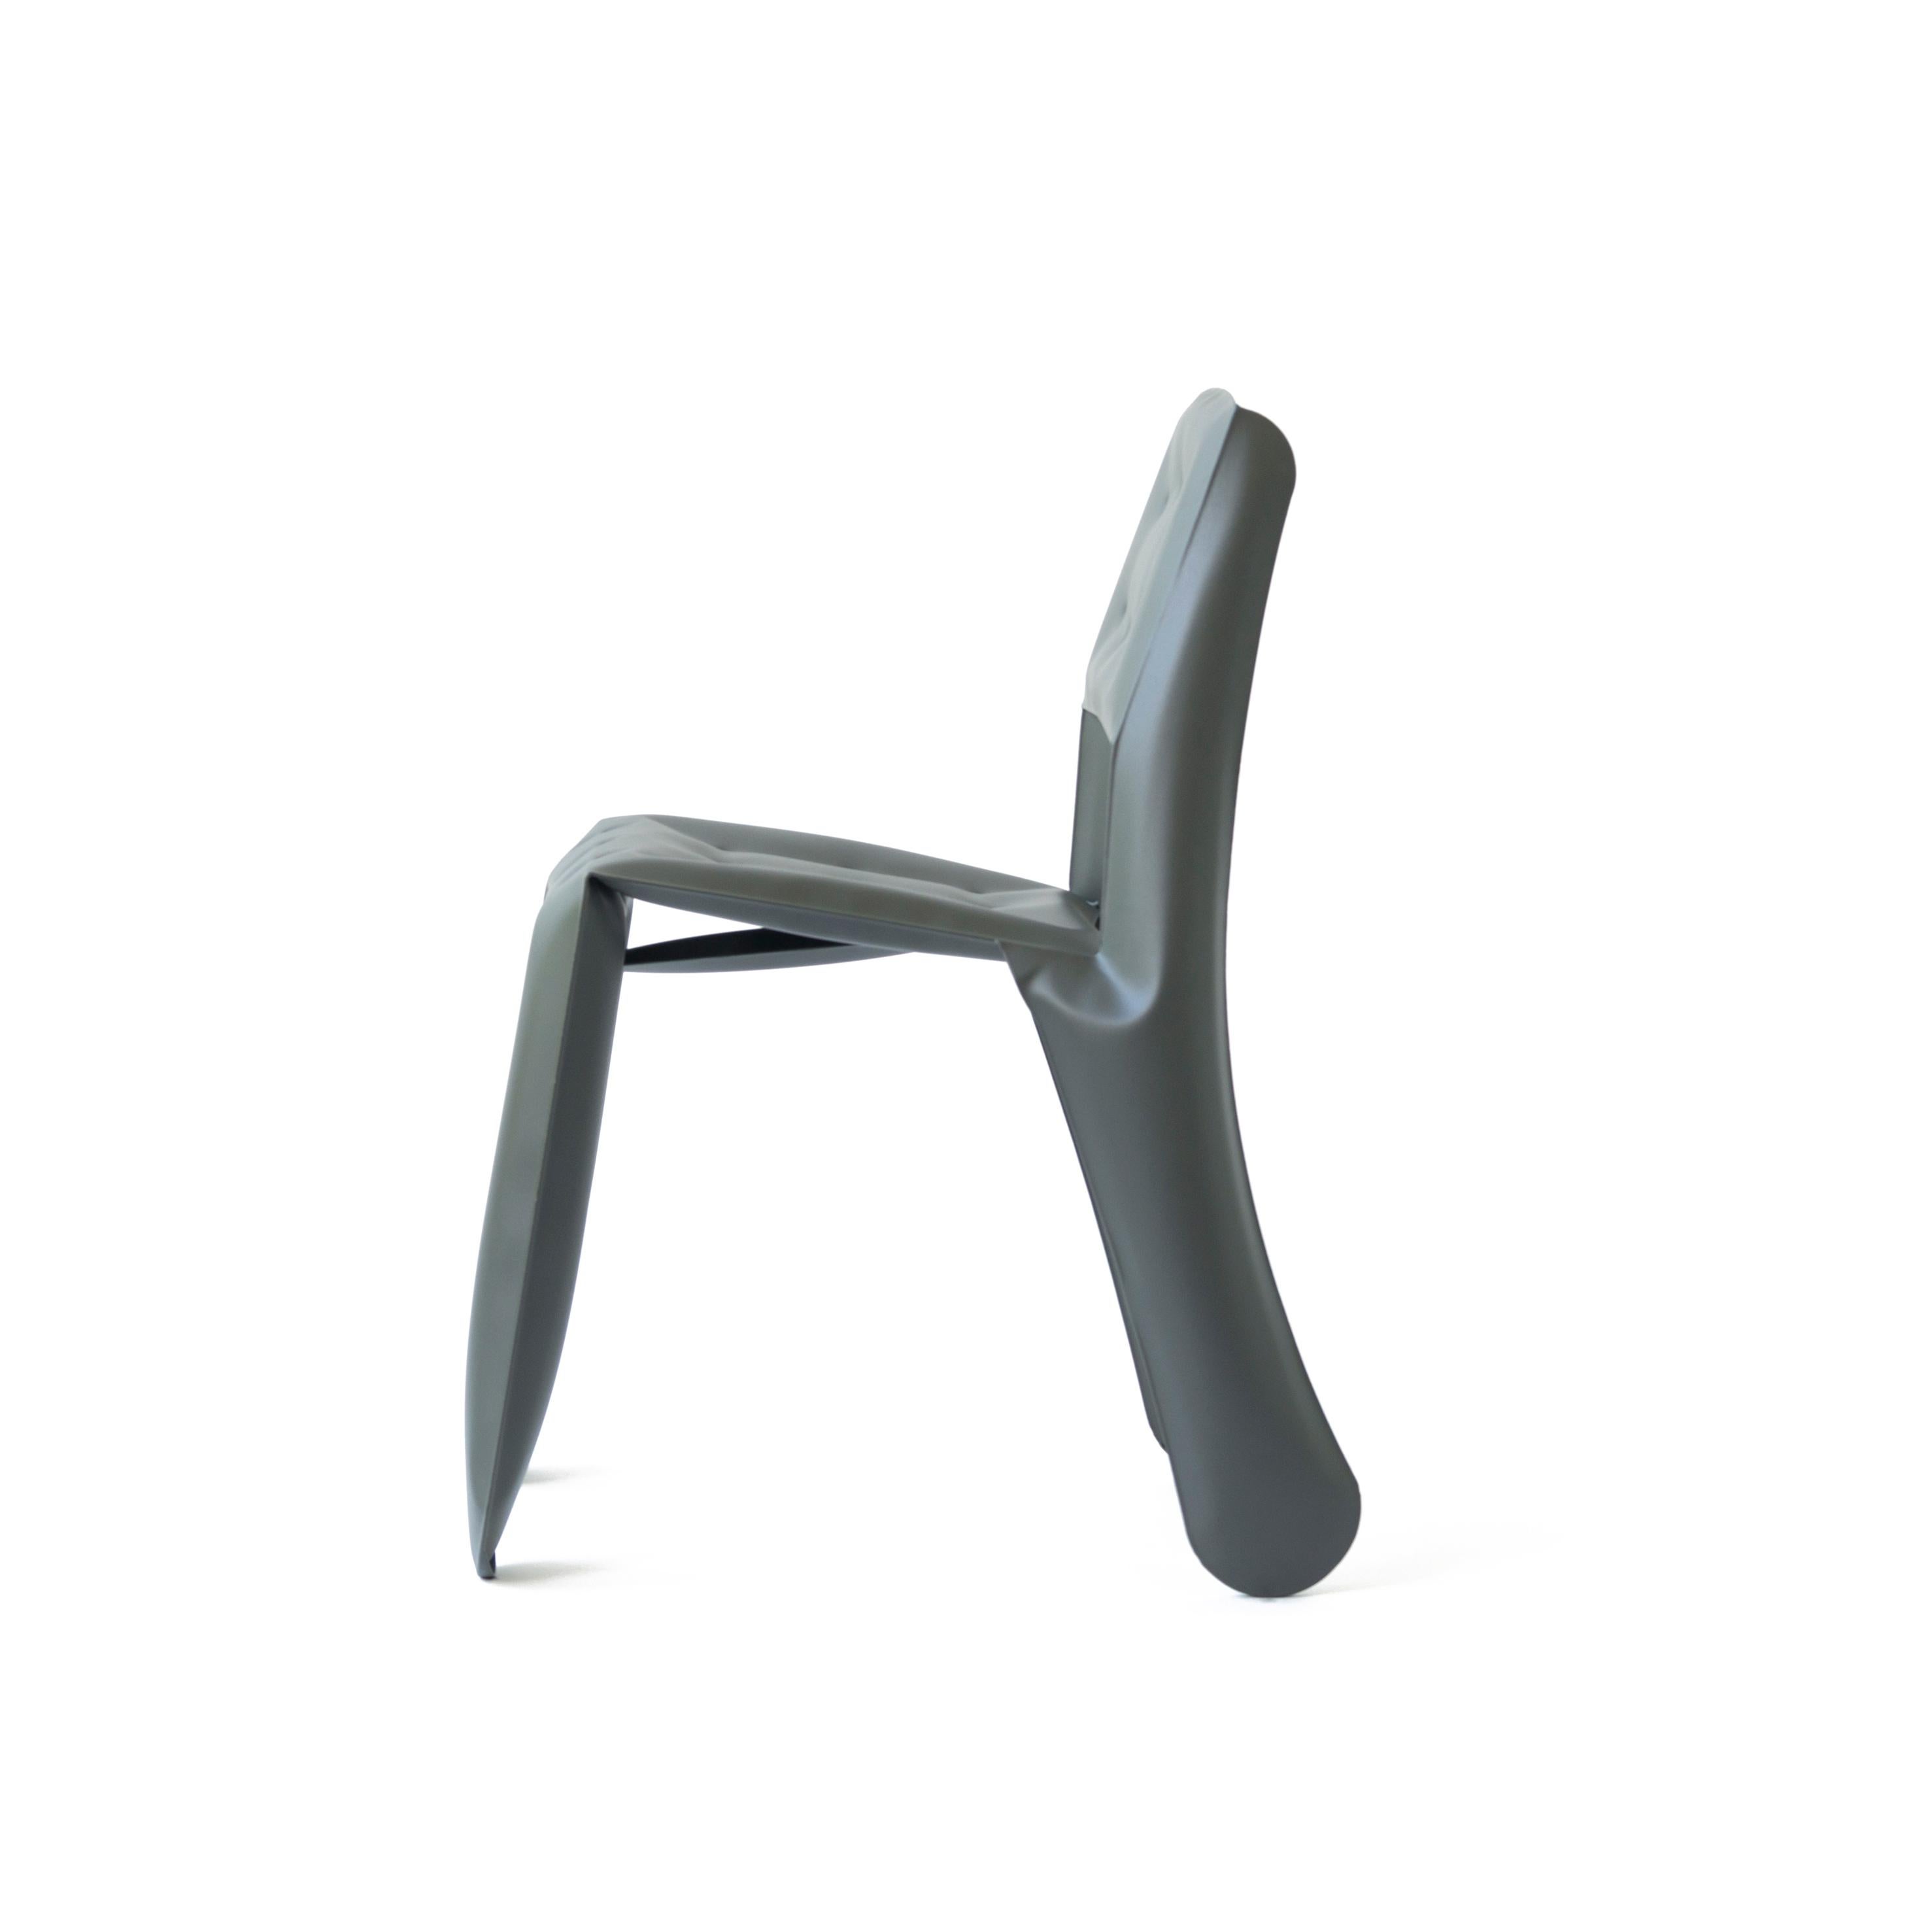 Powder-Coated Umbra Grey Carbon Steel Chippensteel 0.5 Sculptural Chair by Zieta For Sale